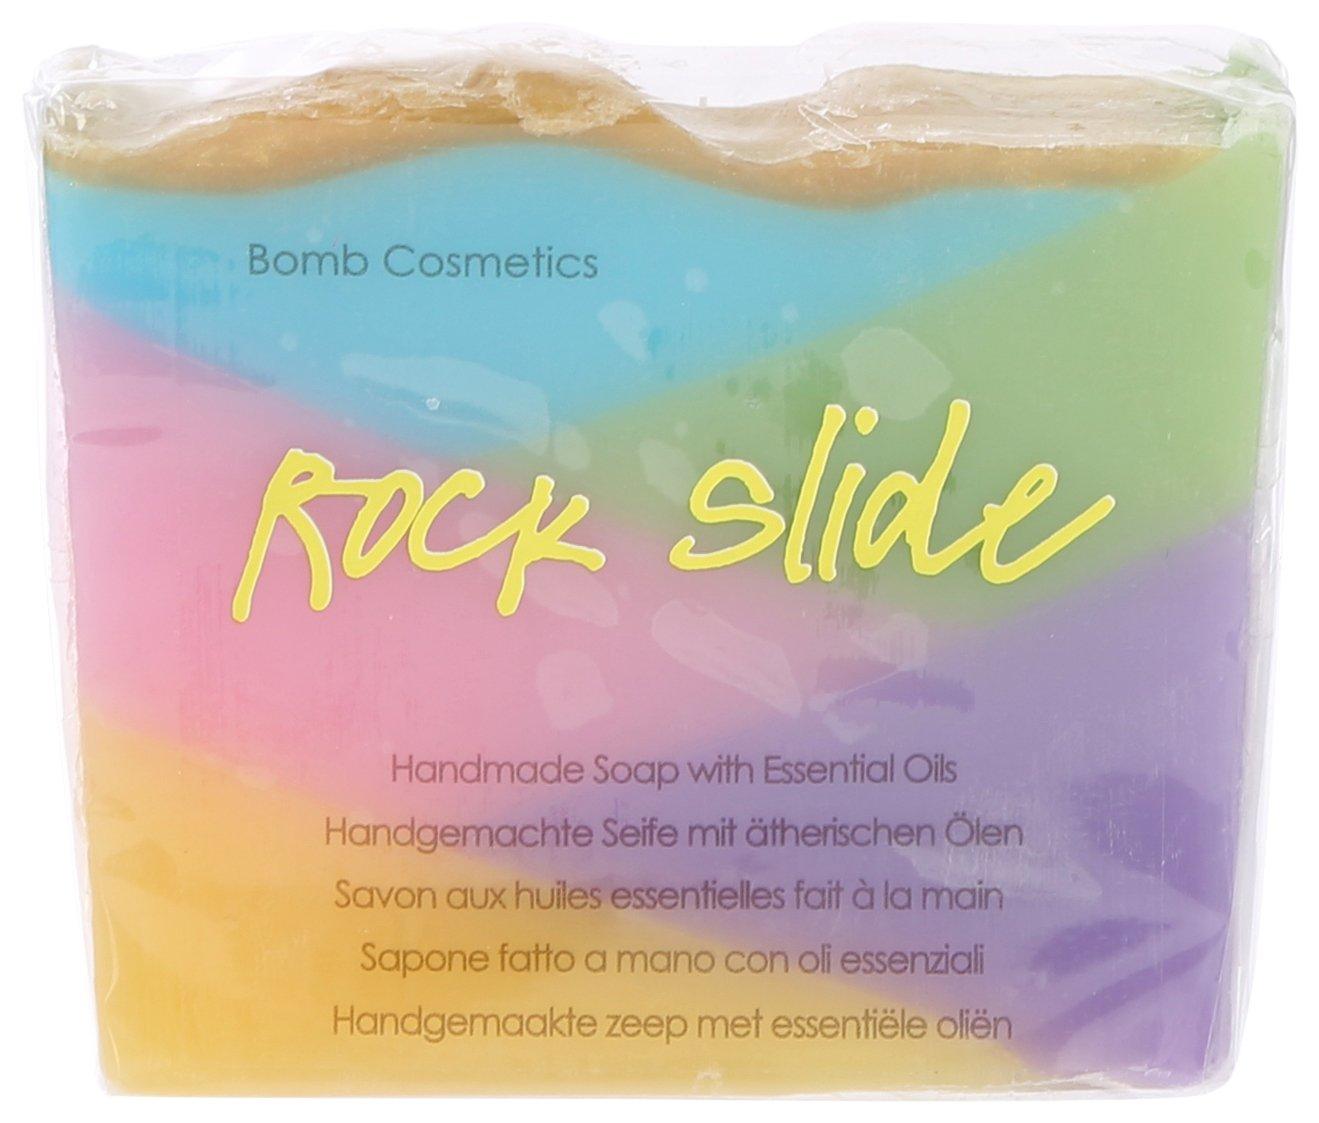 Bomb Cosmetics 3.5 oz. Rock Slide Handmade Soap